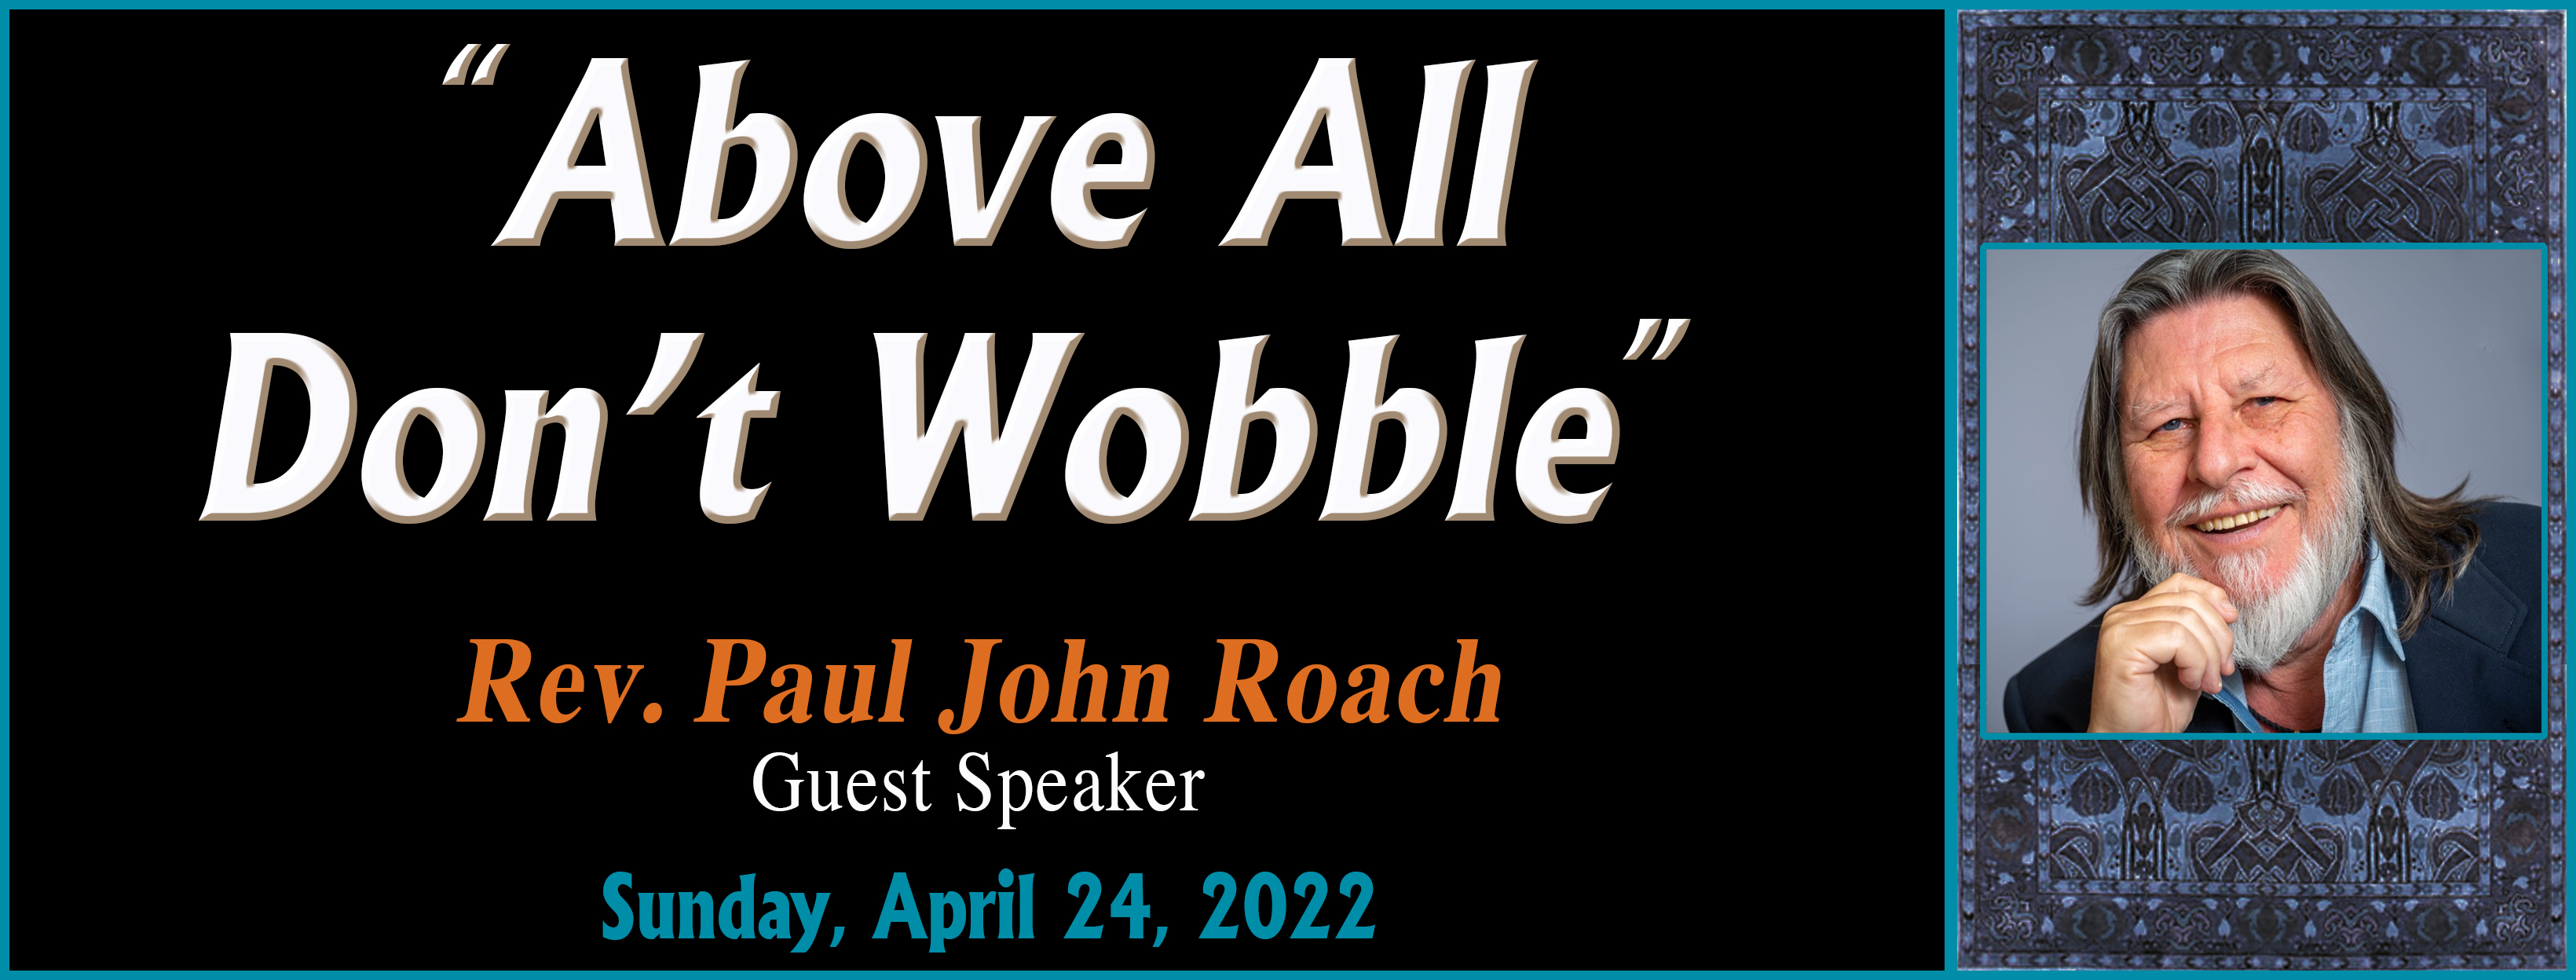 04-24-2022 Above All Don't Wobble - Rev. Paul John Roach